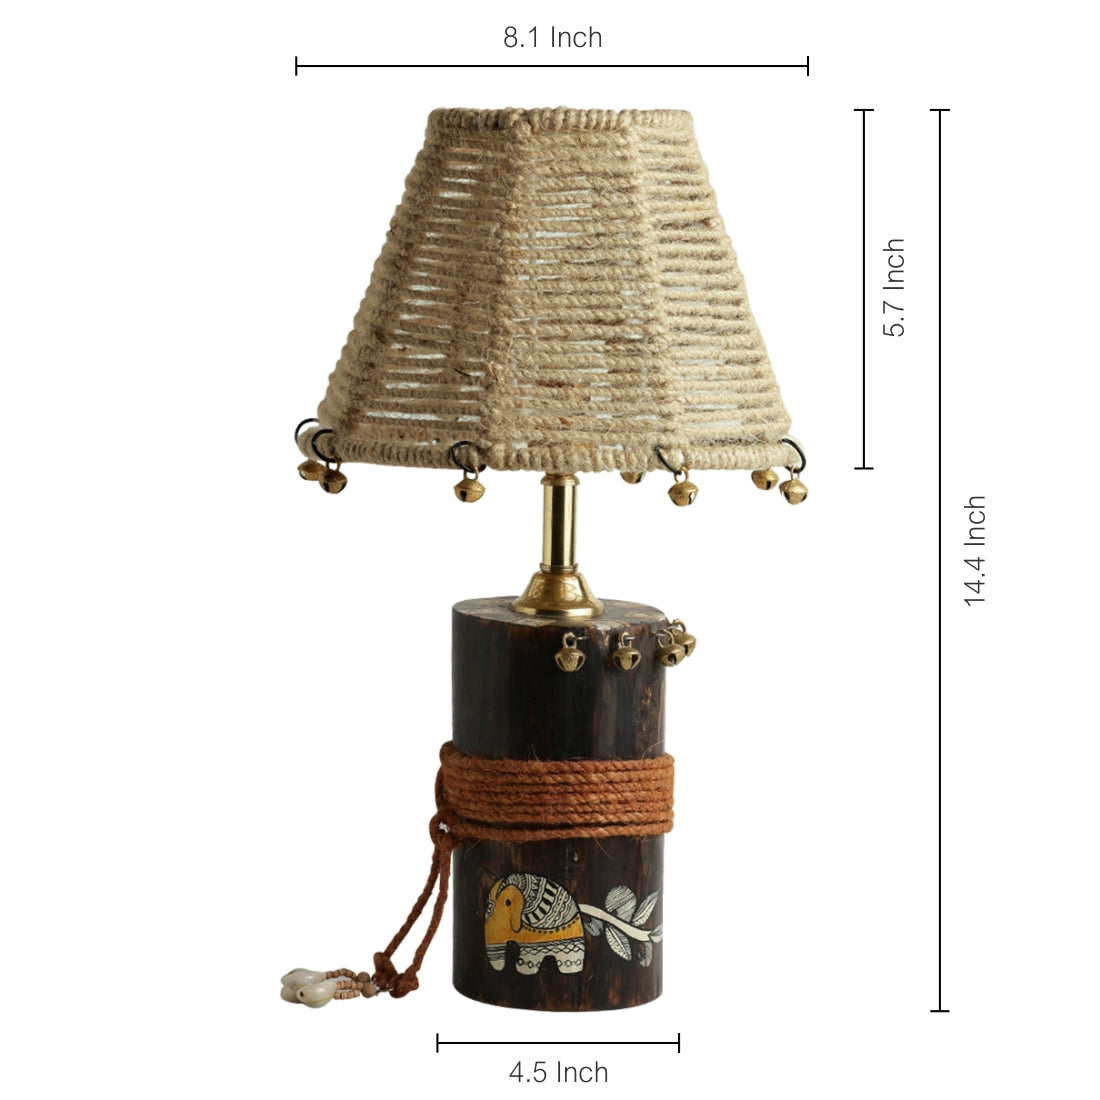 'The Jute-Shade Log' Madhubani Hand-Painted Table Lamp In Wood